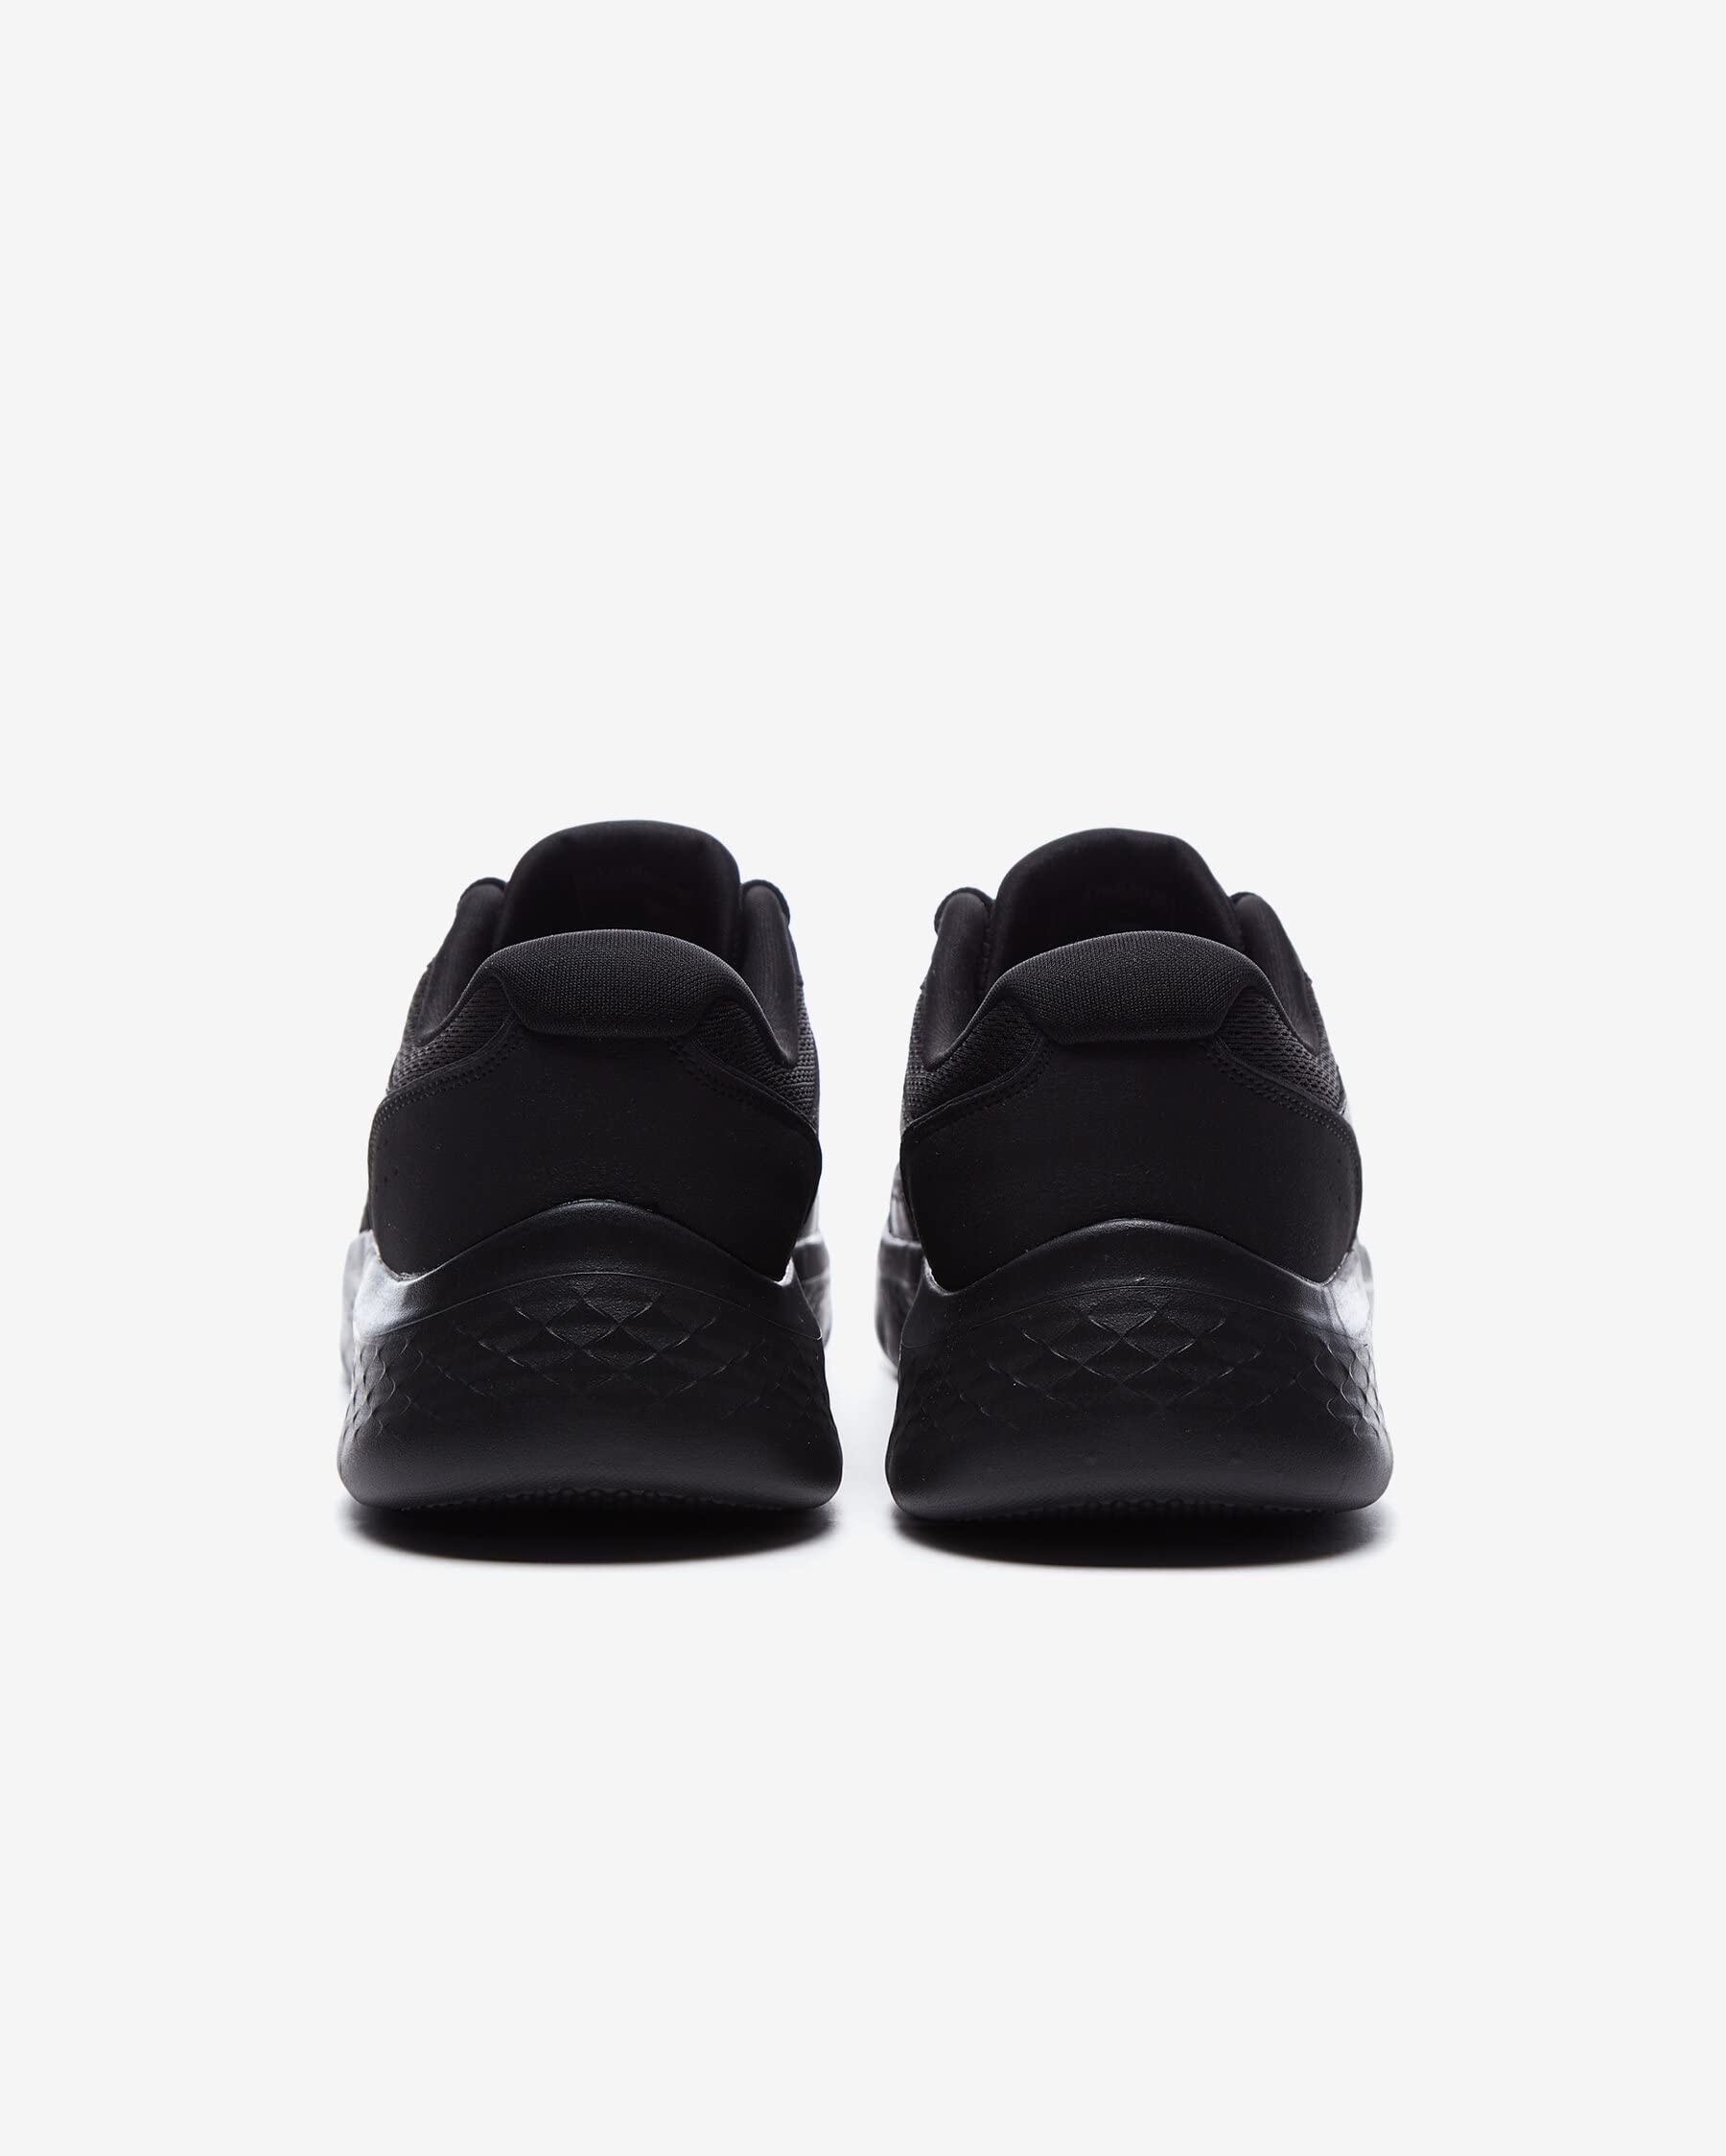 Skechers Men's Gowalk Flex-Athletic Workout Walking Shoes with Air Cooled Foam Sneakers, Black 1, 12.5